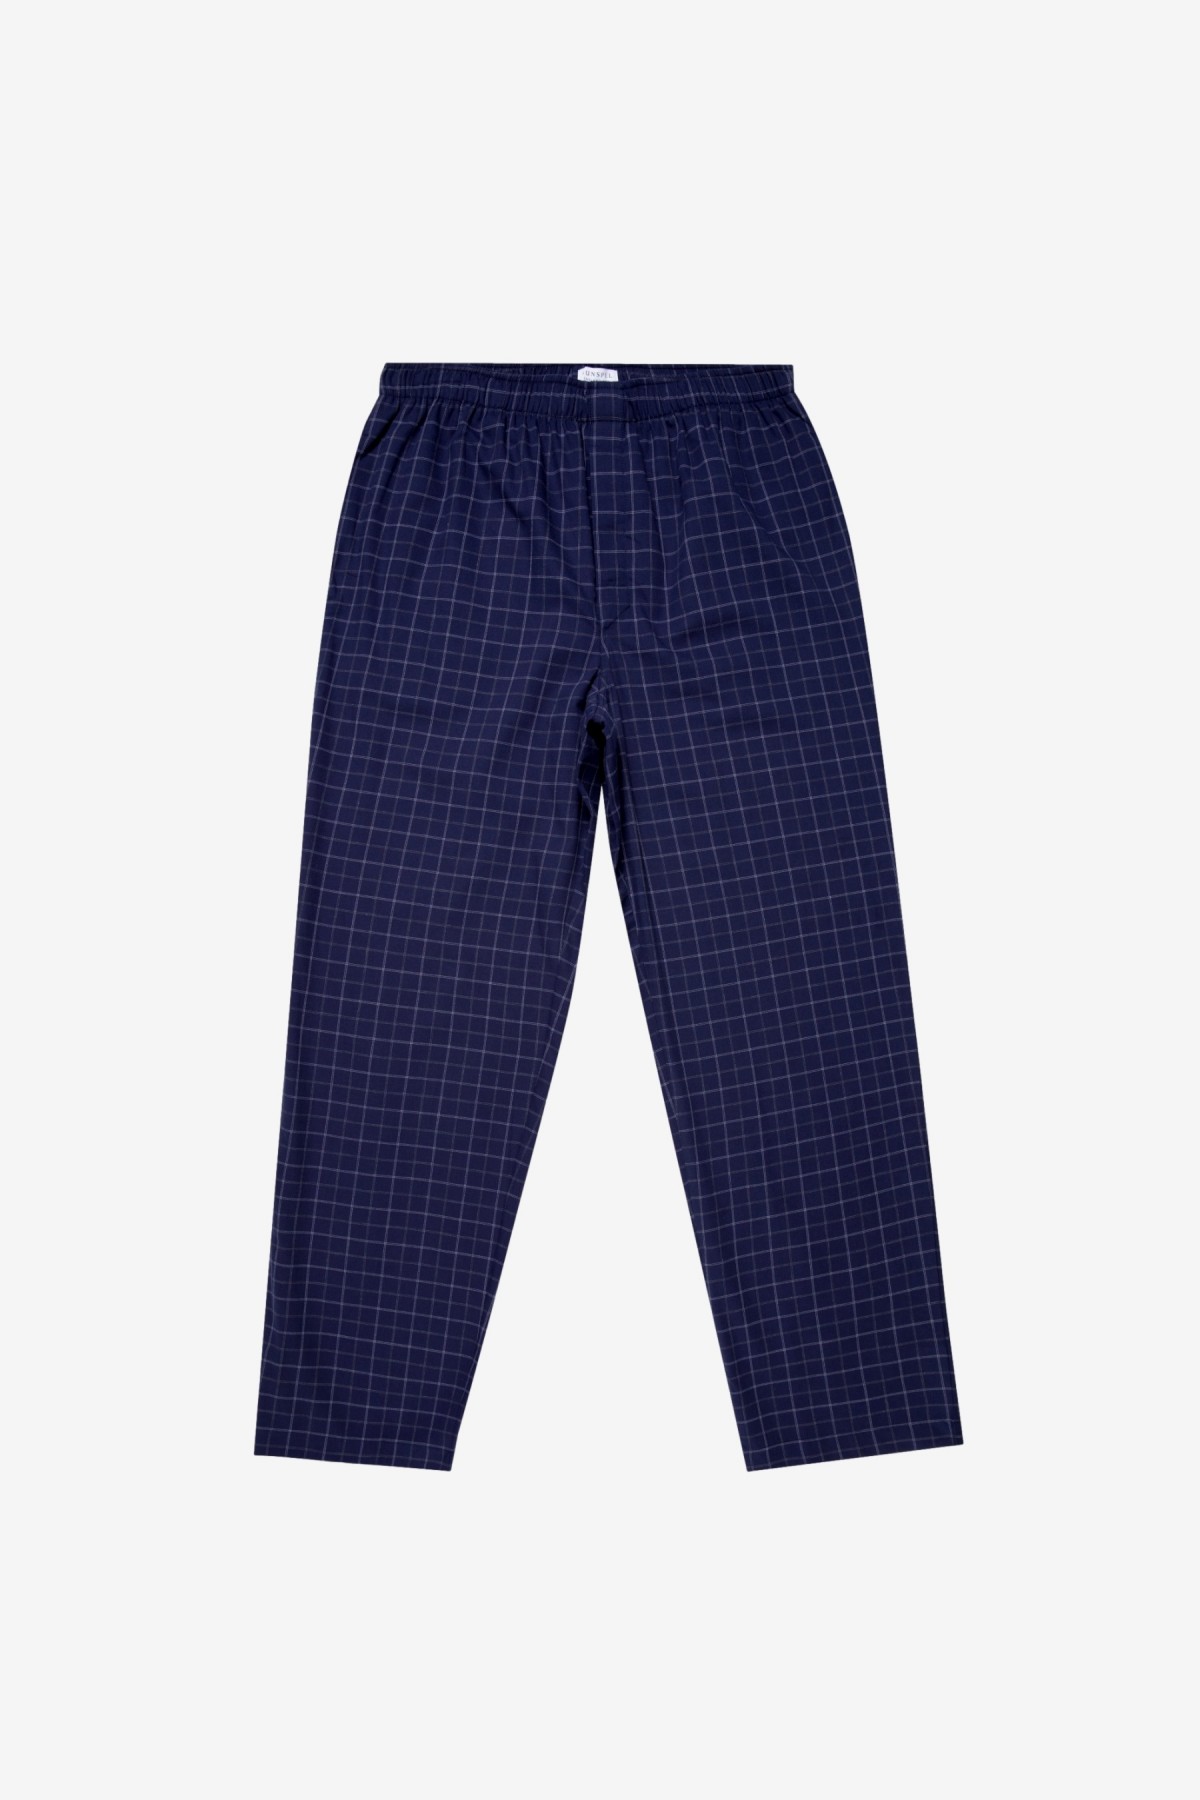 Sunspel Pyjama Trousers in Navy Check